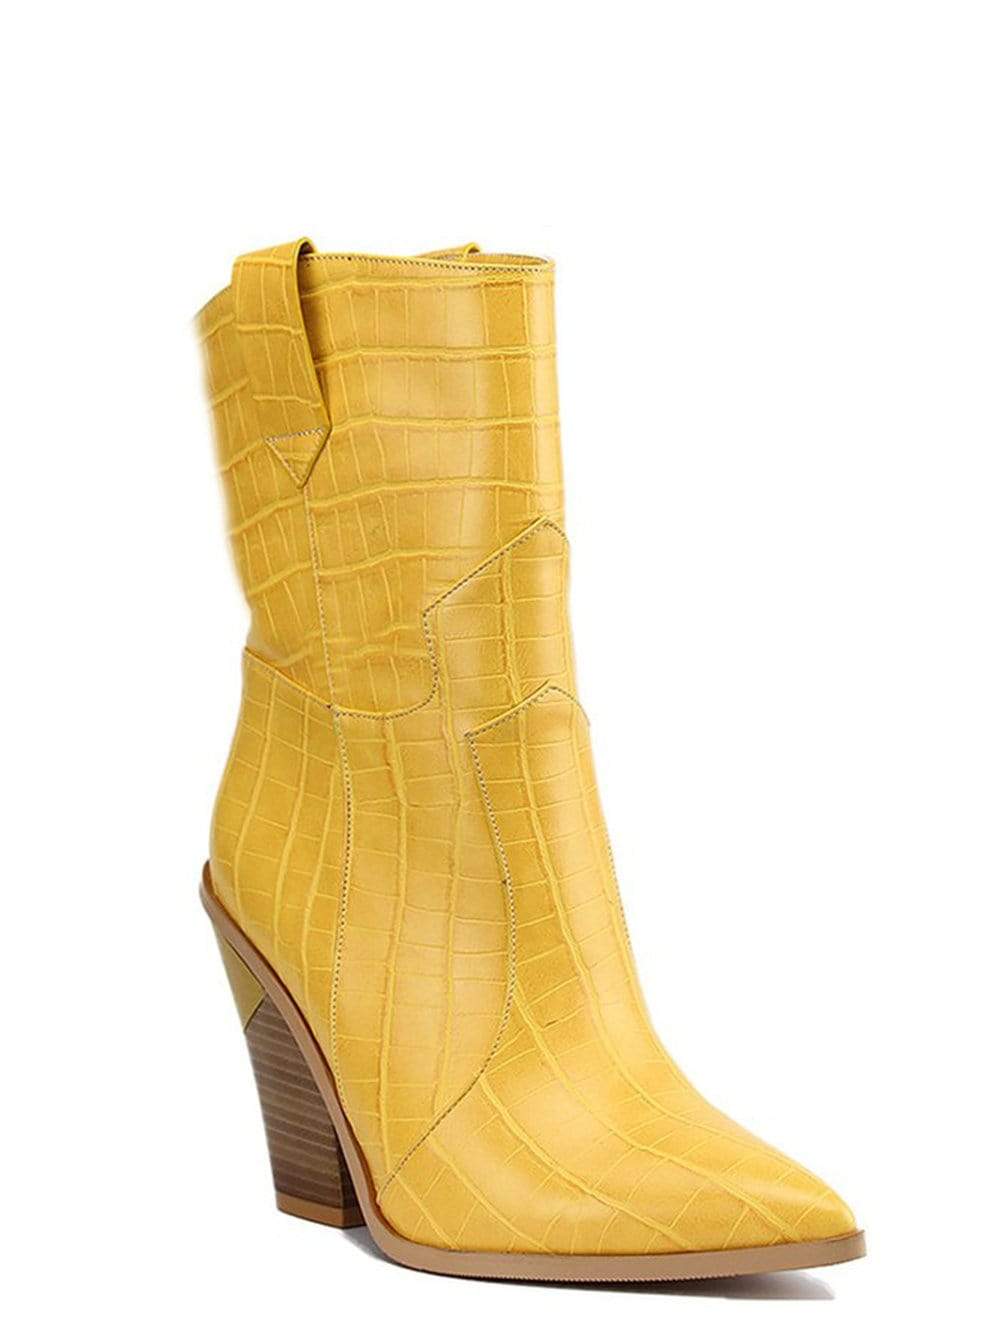 Cutwalk Mid Boot in Yellow